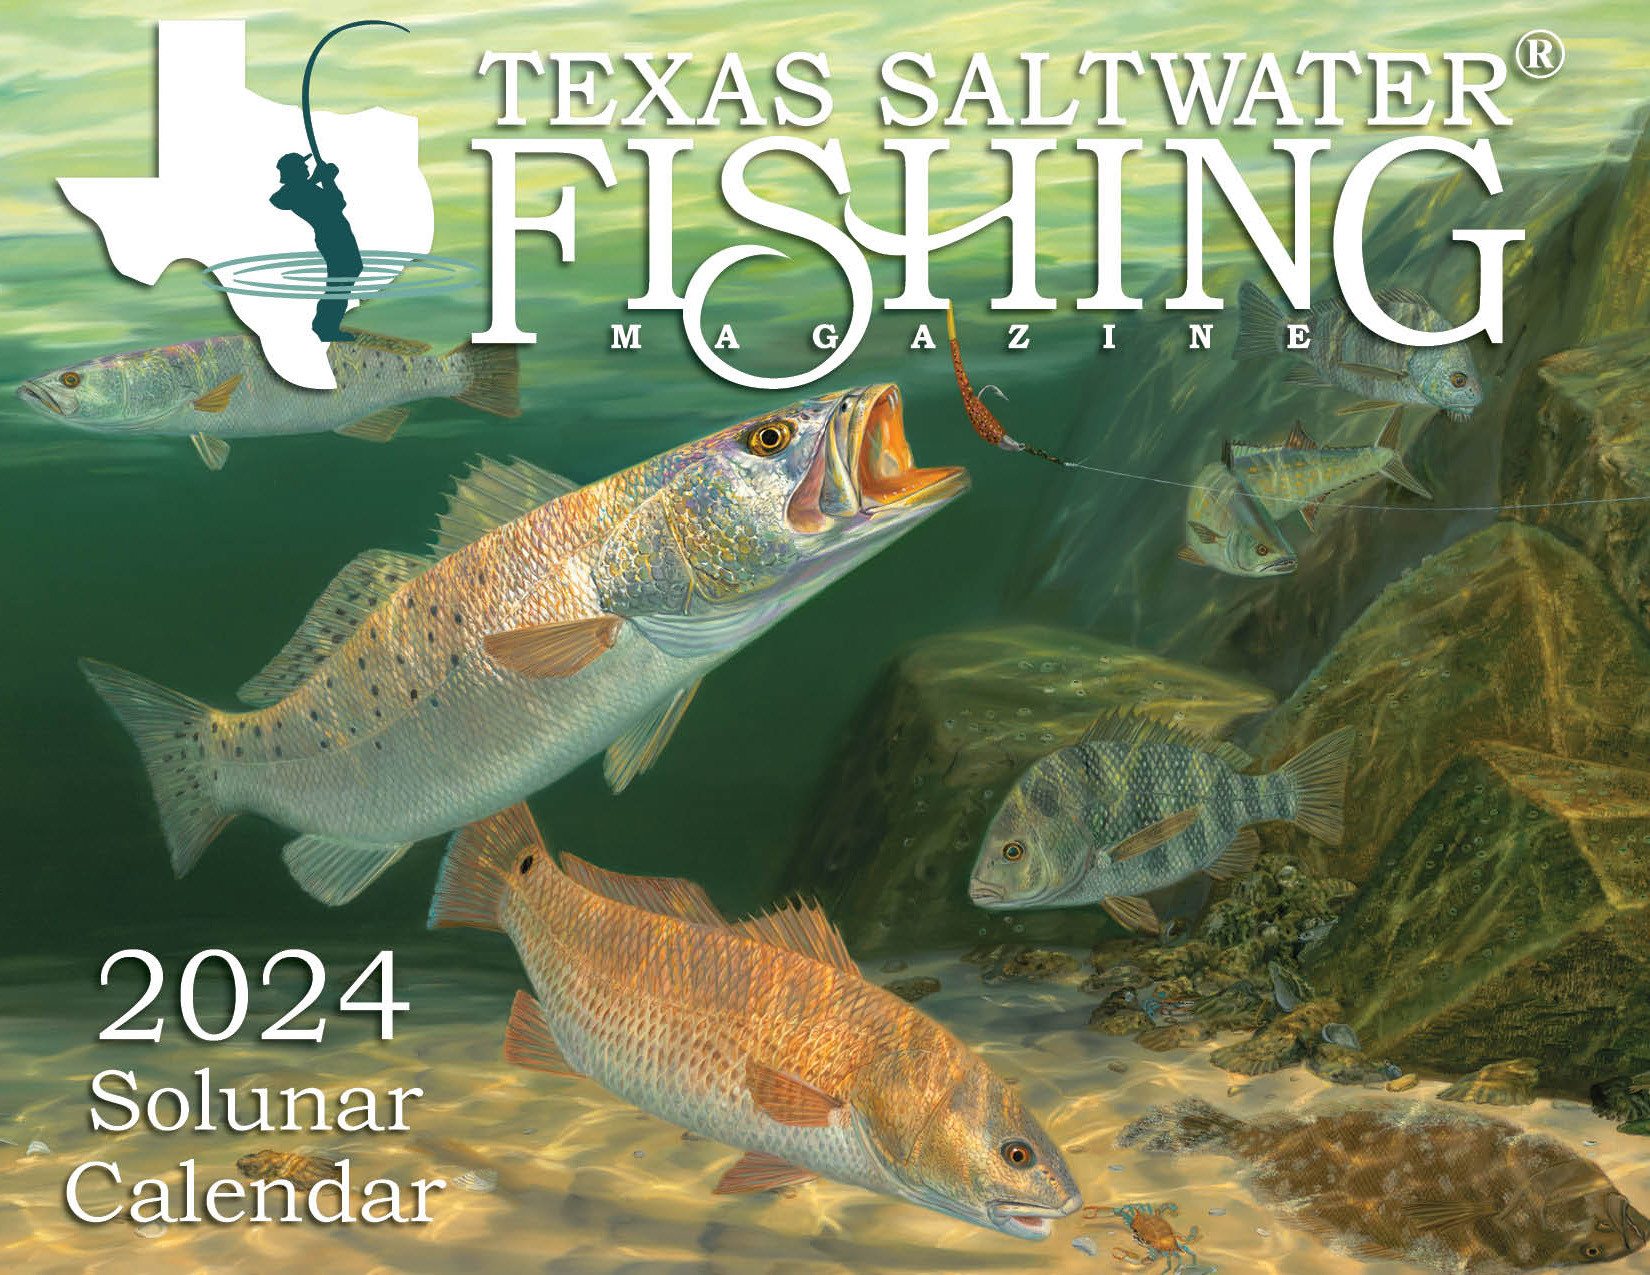 https://store.texassaltwaterfishingmagazine.com/media/catalog/product/cache/1/image/9df78eab33525d08d6e5fb8d27136e95/c/o/cover.jpg